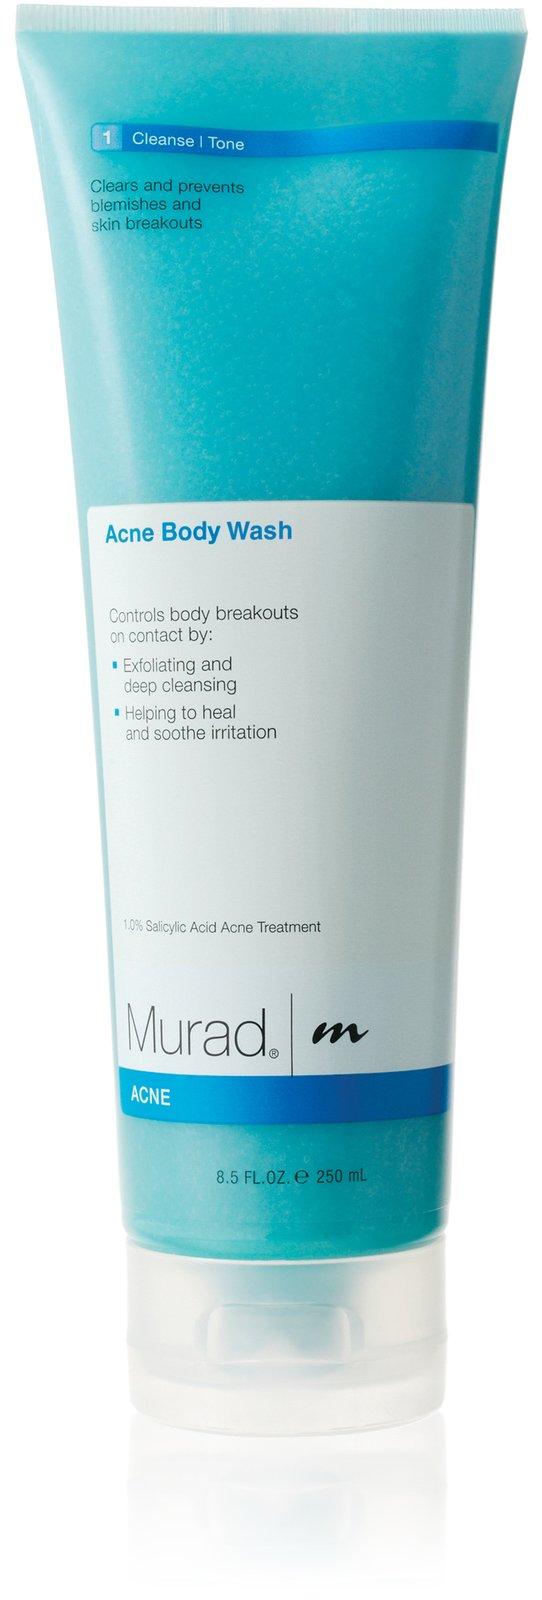 Murad Acne Body Wash-8.5oz